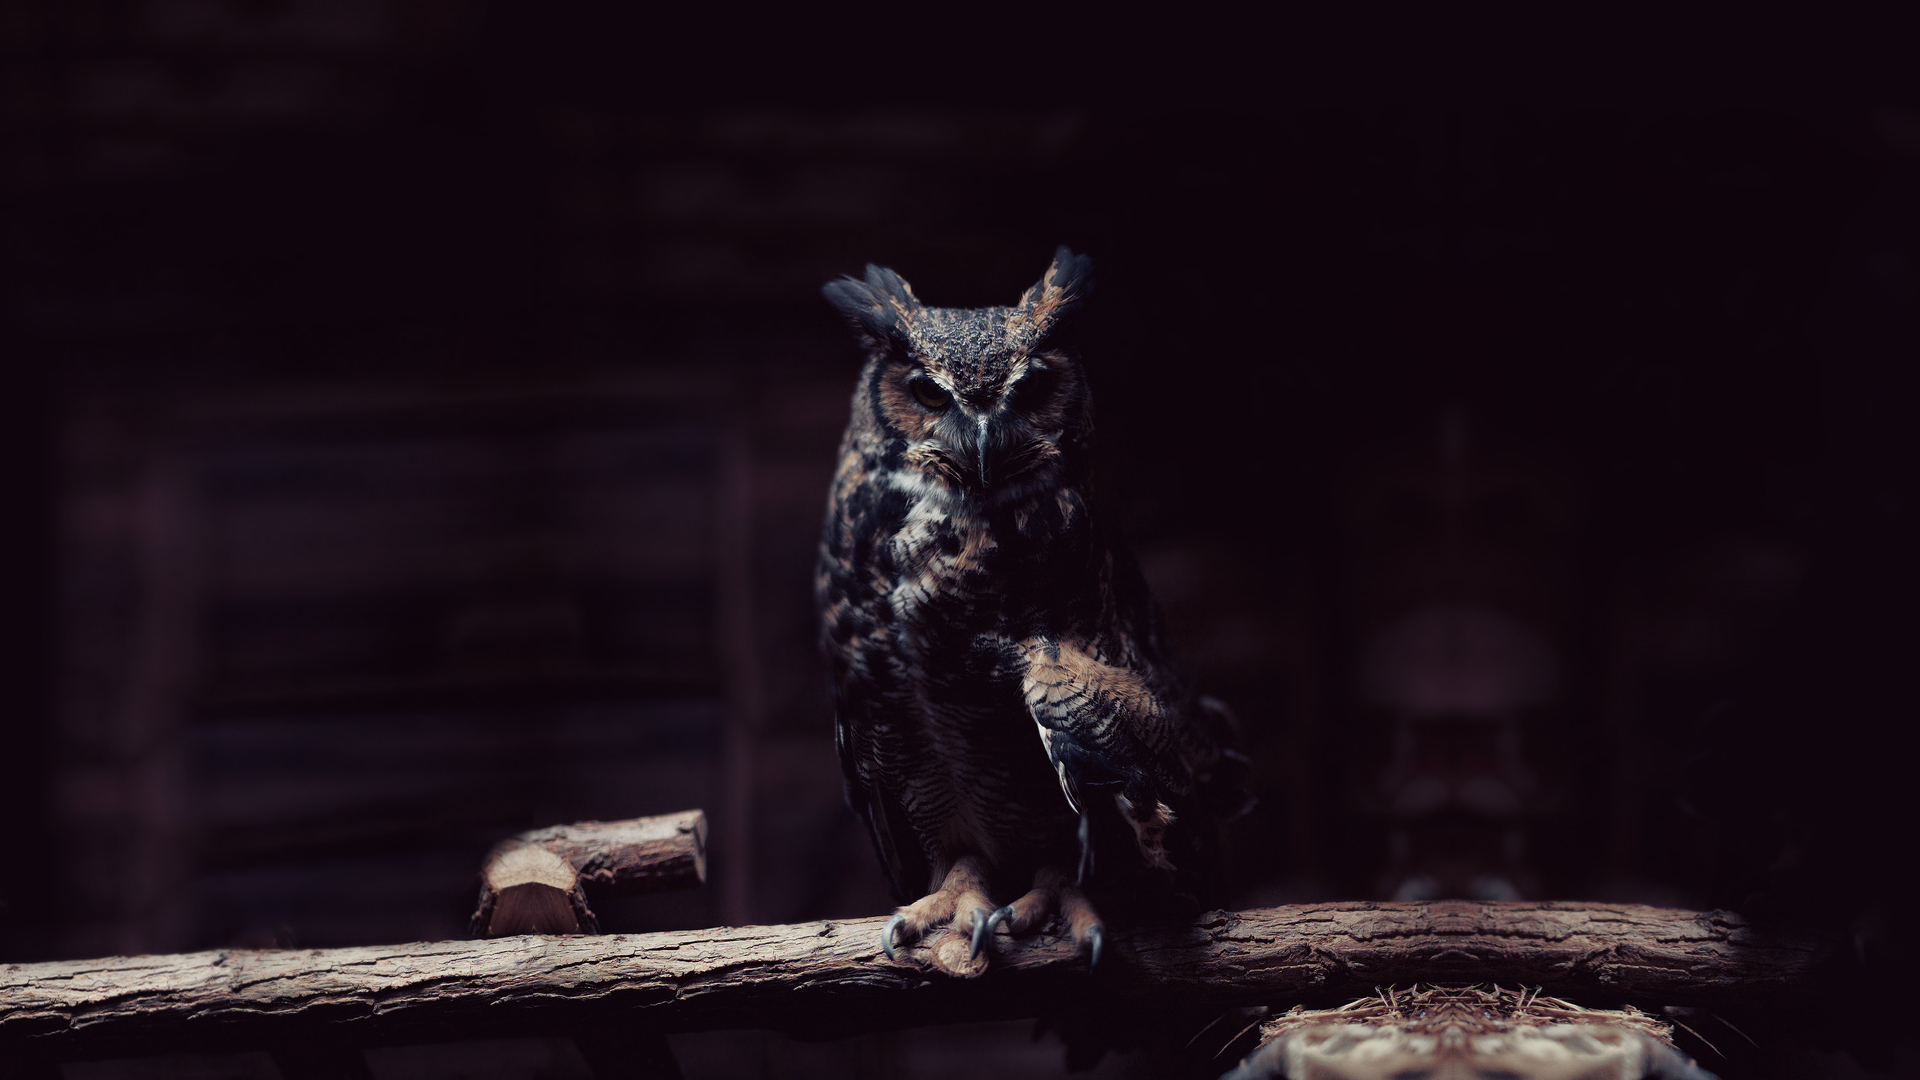 Owl Photography - ID: 27921